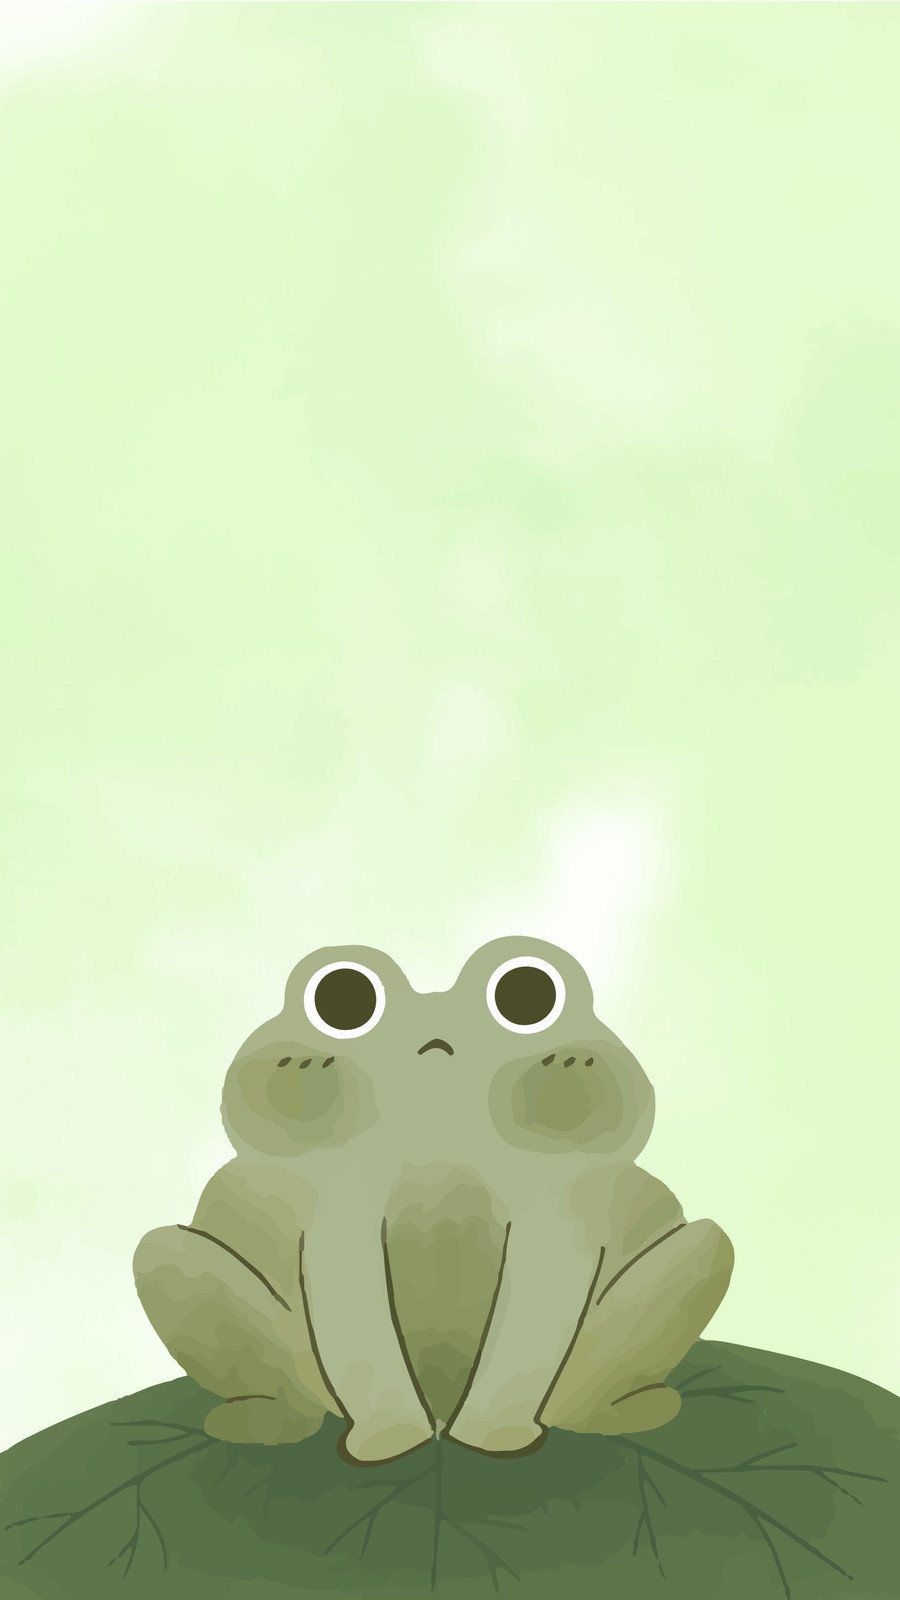 Premium Vector  Cute green frog cartoon seamless pattern wallpaper  background